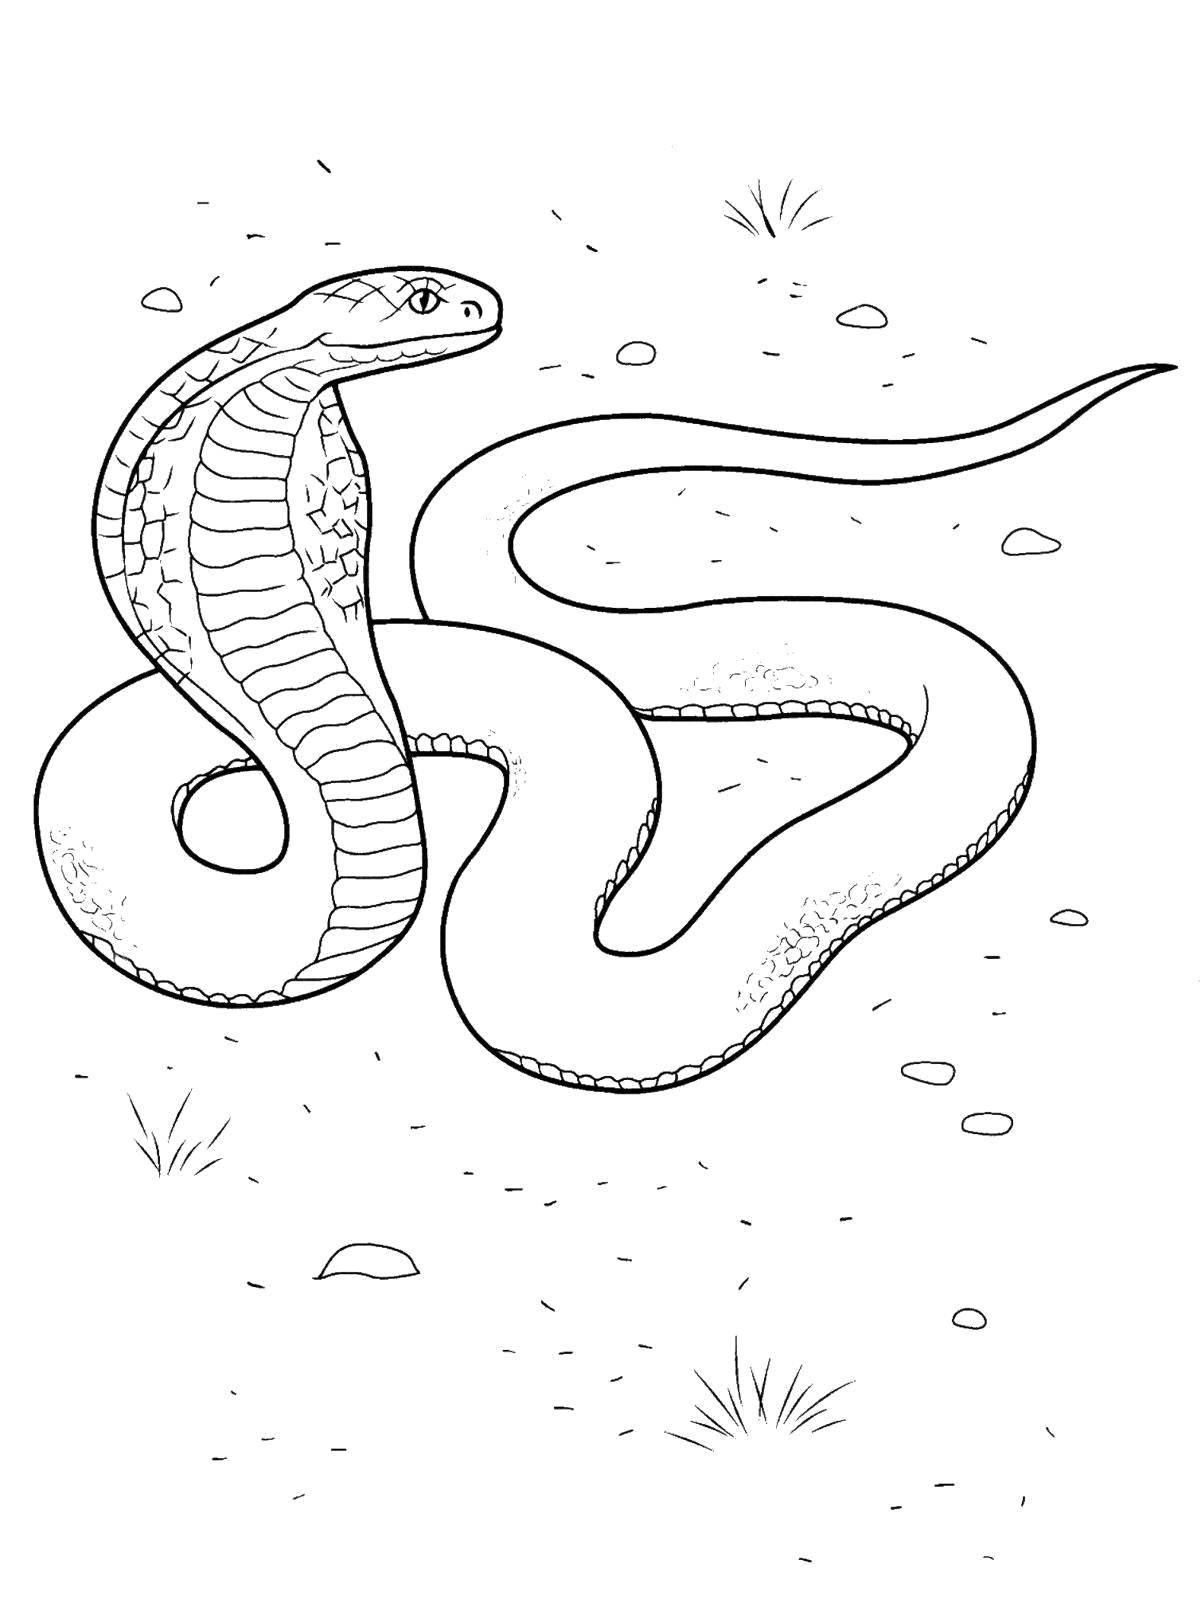 Coloring Cobra. Category reptiles. Tags:  Reptile, snake.